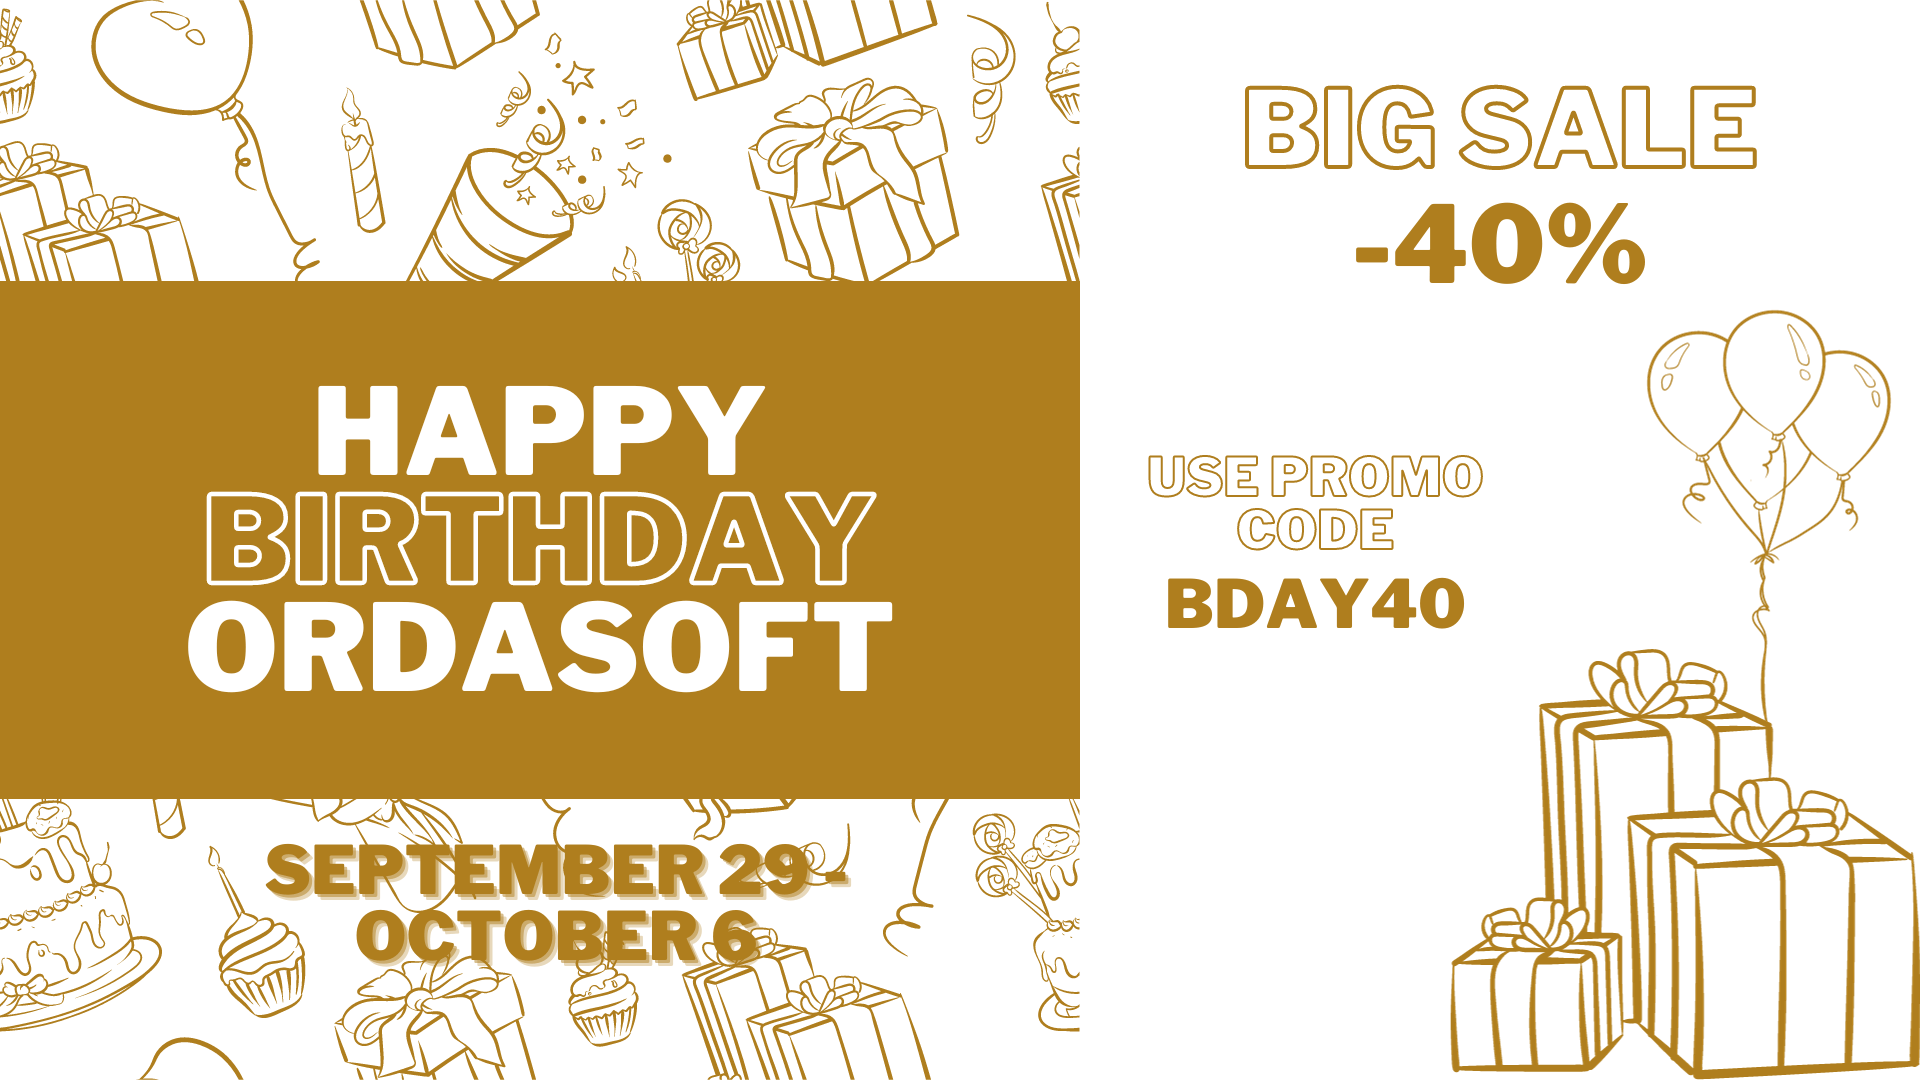 ordasoft Joomla News: Celebrating OrdaSoft Birthday with a Special Offer!